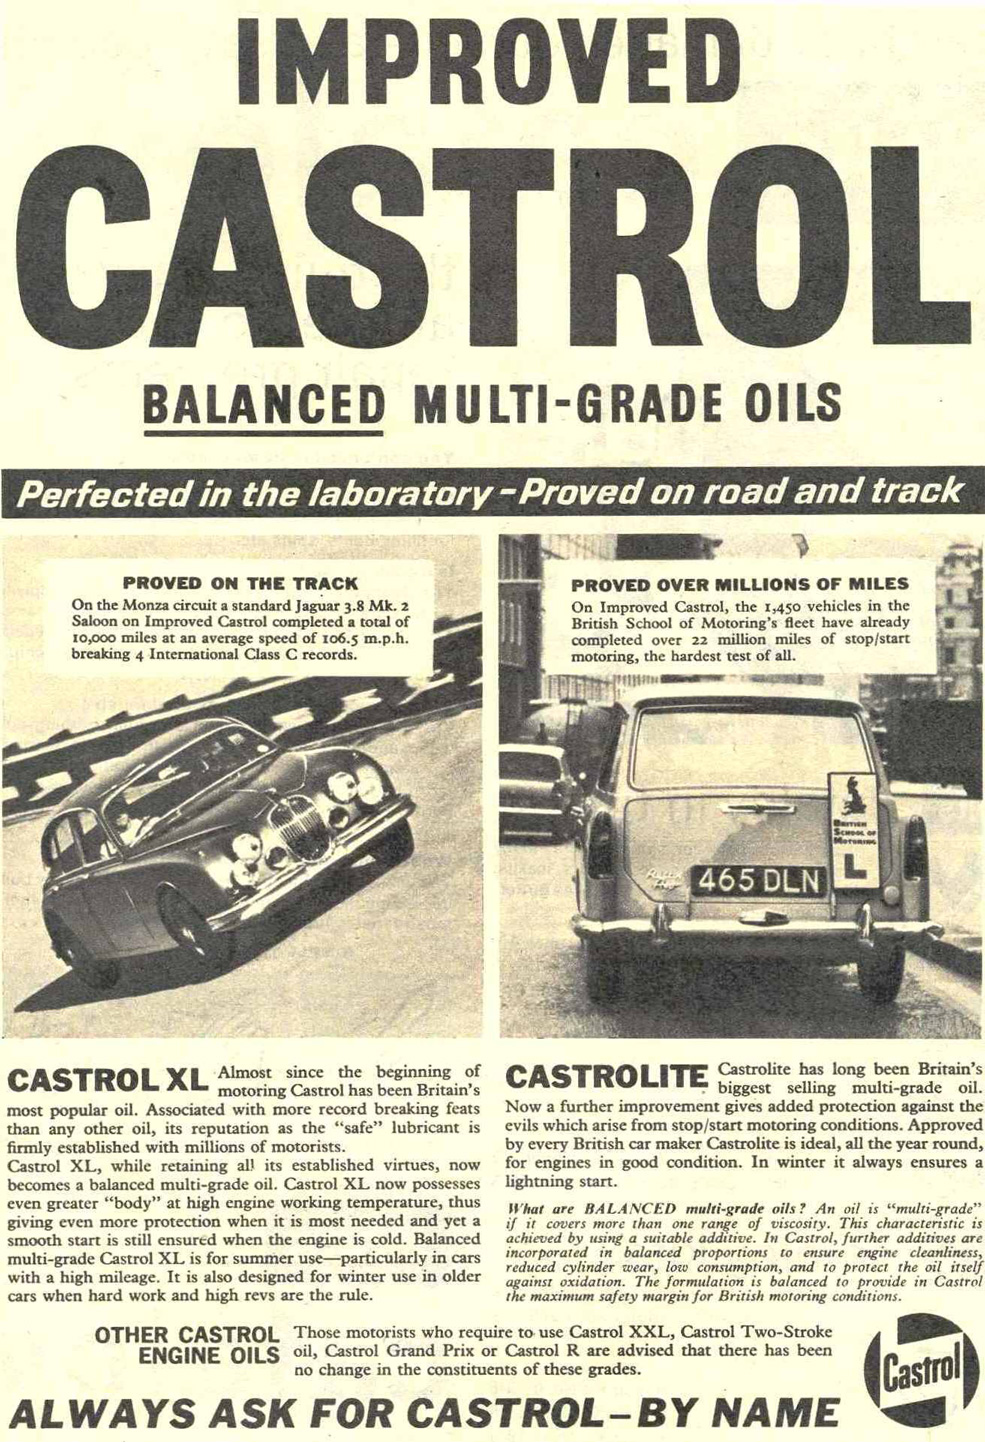 Old Castrol Advert